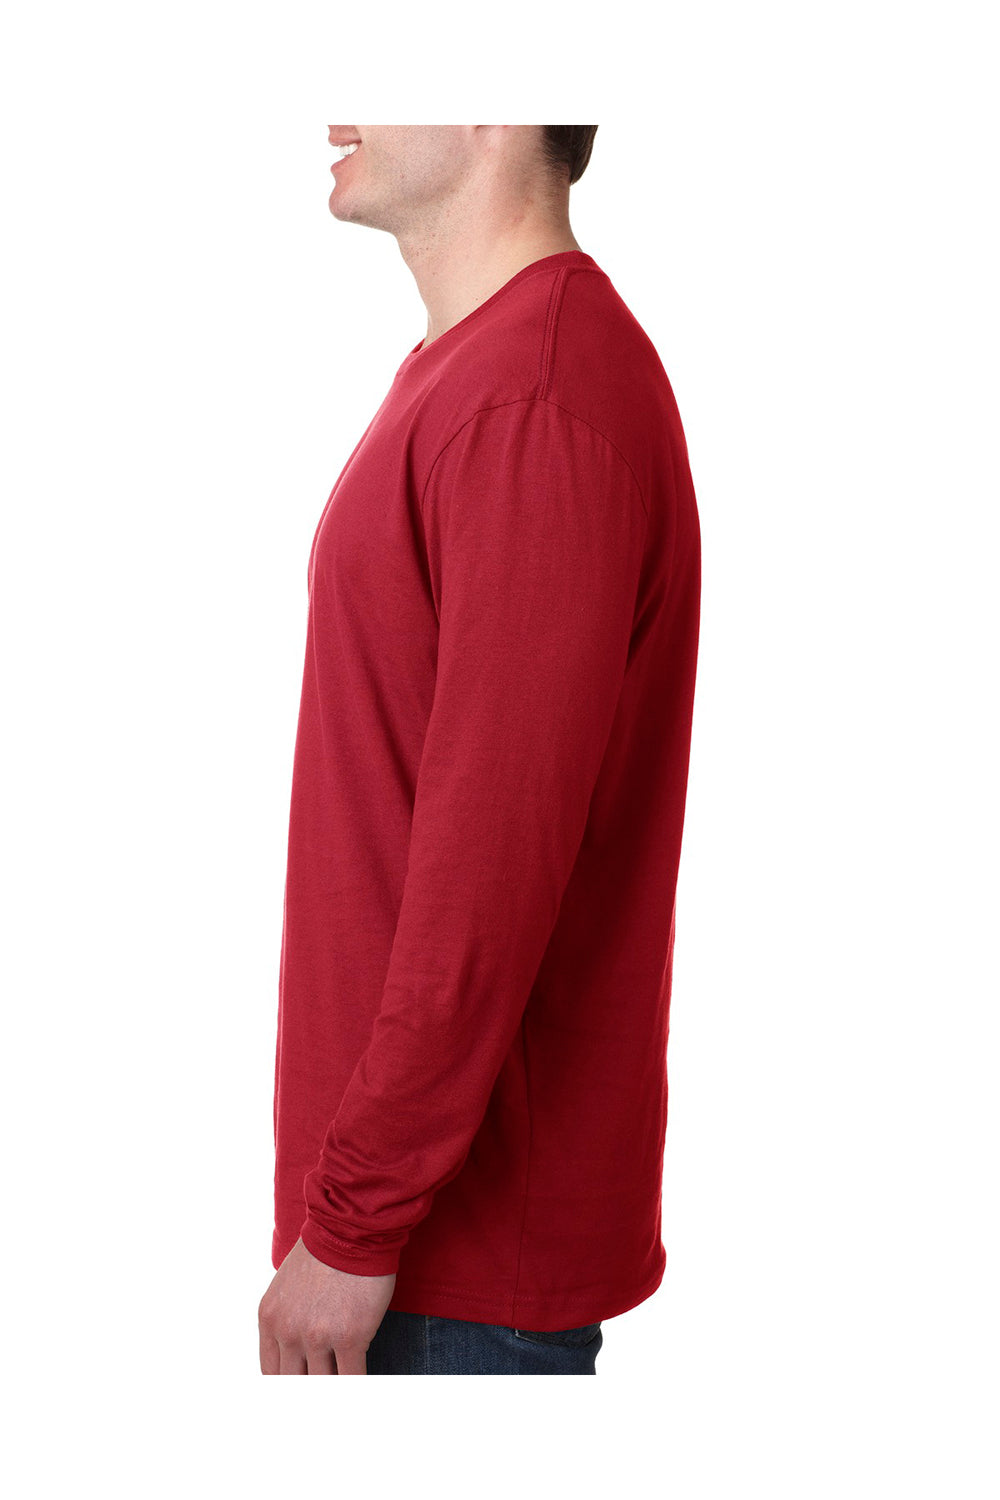 Next Level N3601 Mens Fine Jersey Long Sleeve Crewneck T-Shirt Cardinal Red Side